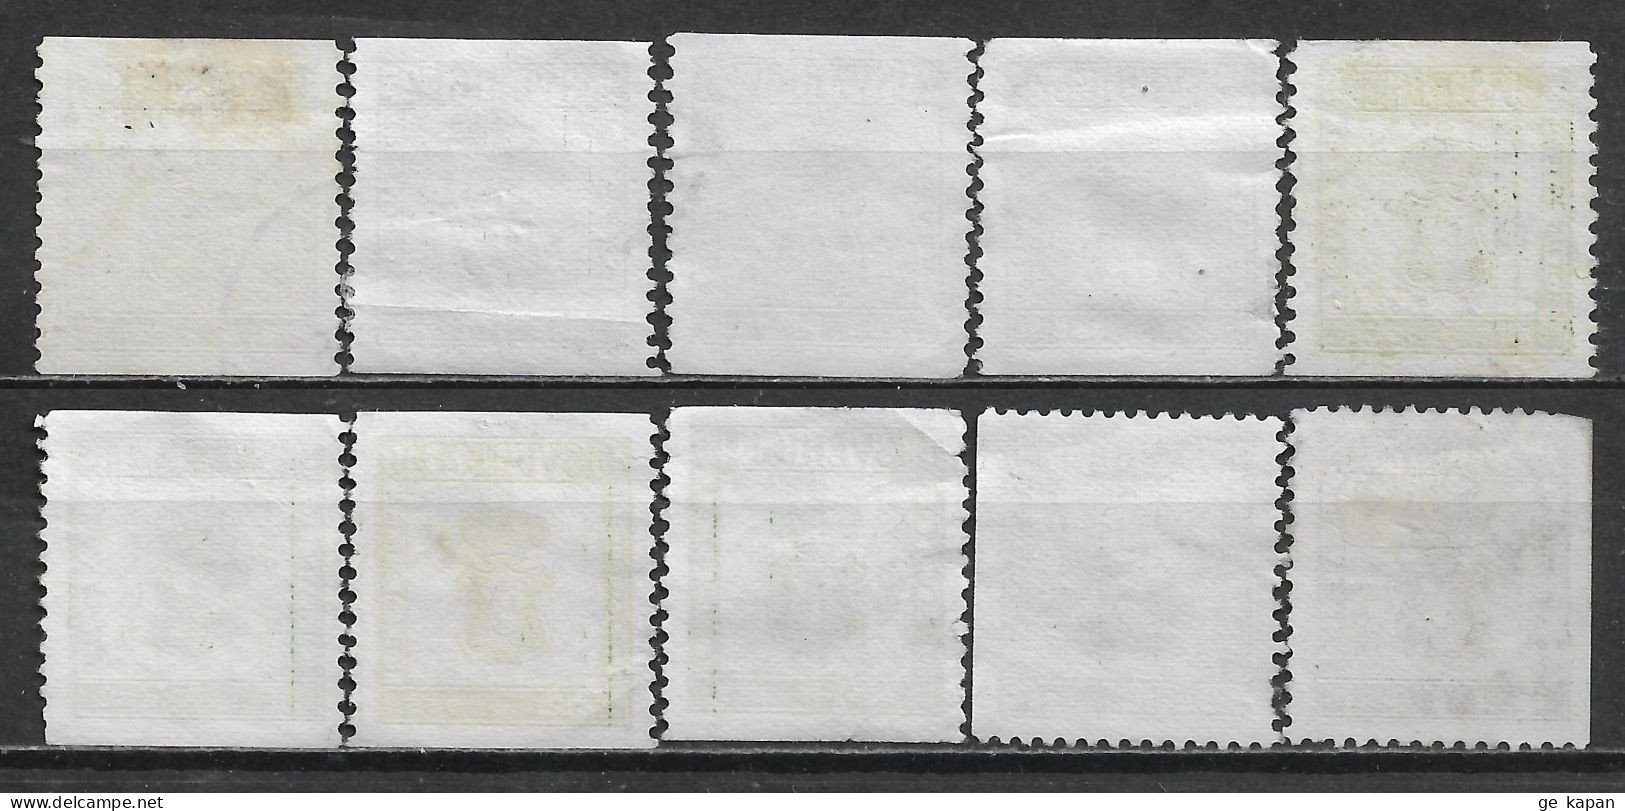 1955 SWEDEN Set Of 10 Used Stamps (Scott # 474-476) CV $2.60 - Gebraucht